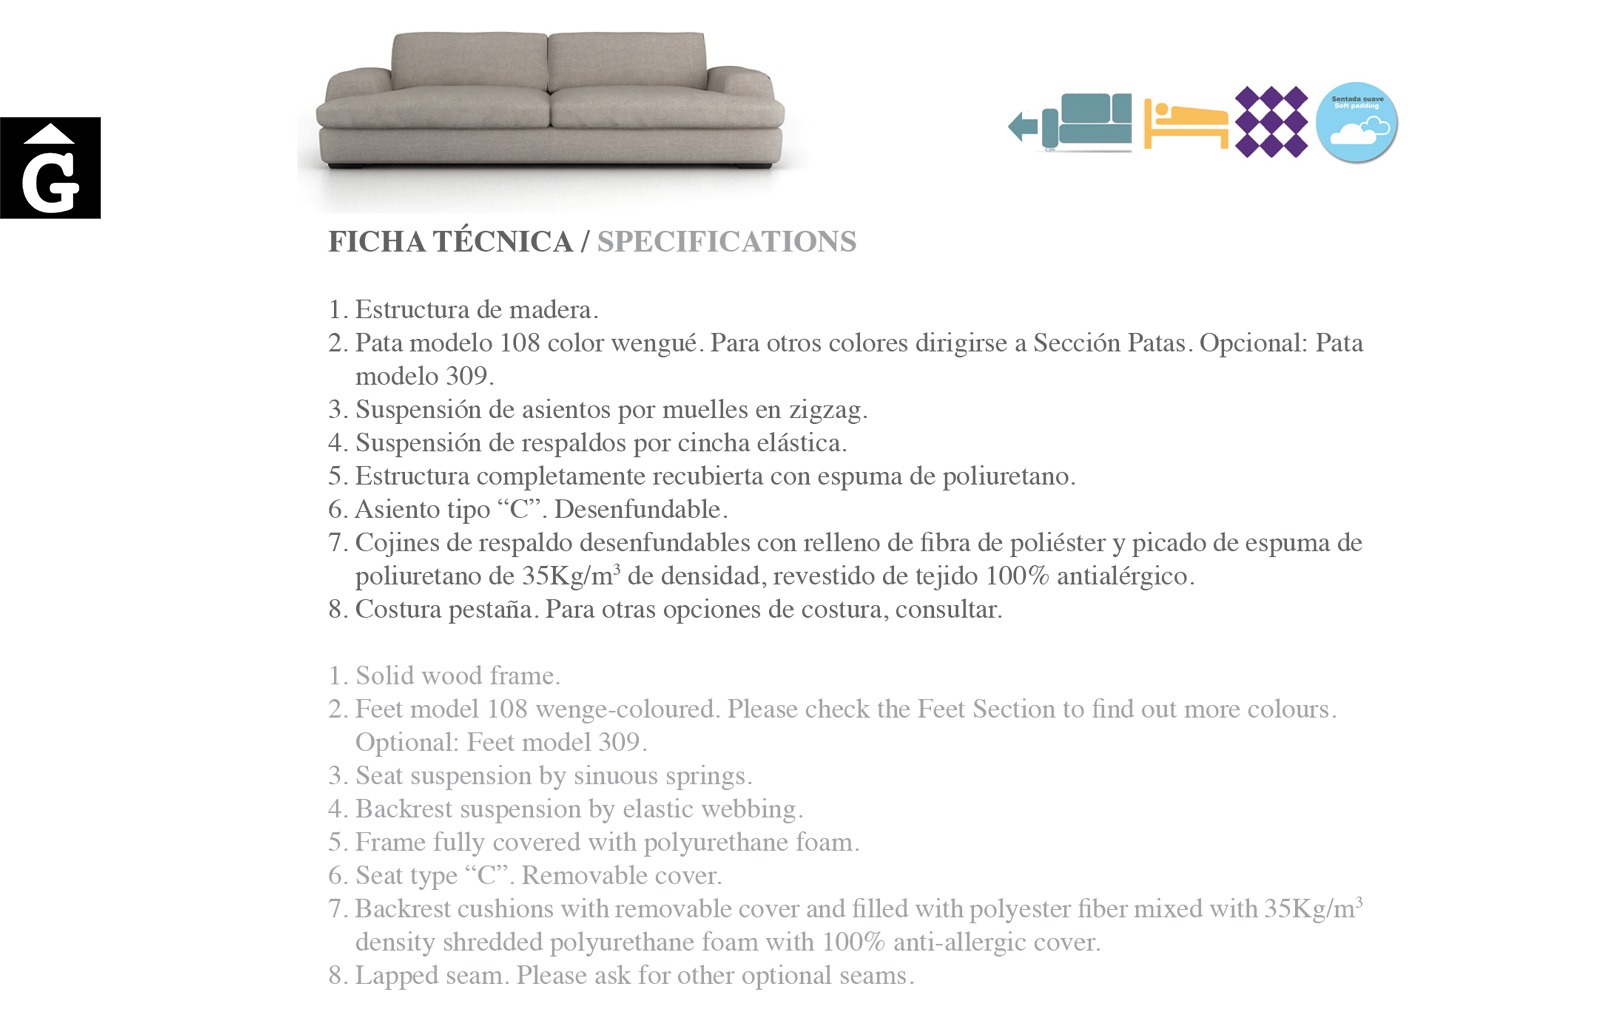 142 1 Jaja Moradillo by mobles Gifreu tapisseria de qualitat sofas relax llits puff pouf chaixelongues butaques sillons